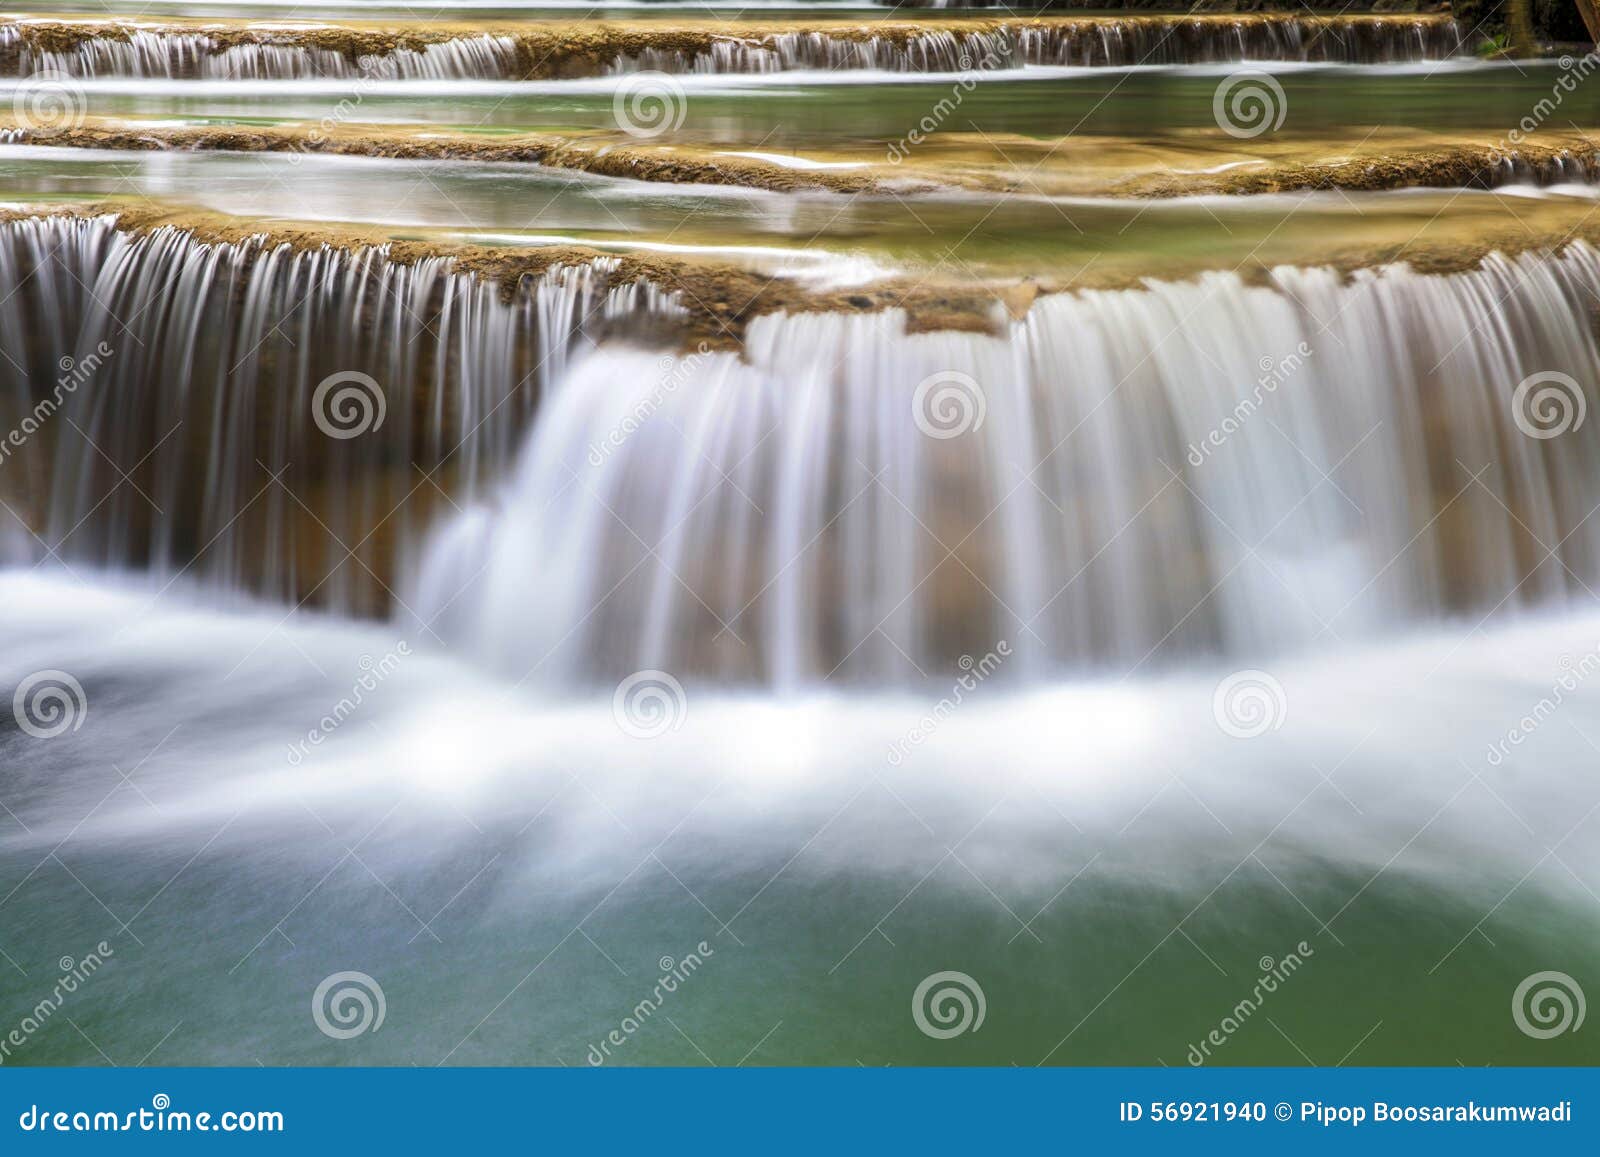 waterfalls of asia, huai mae khamin